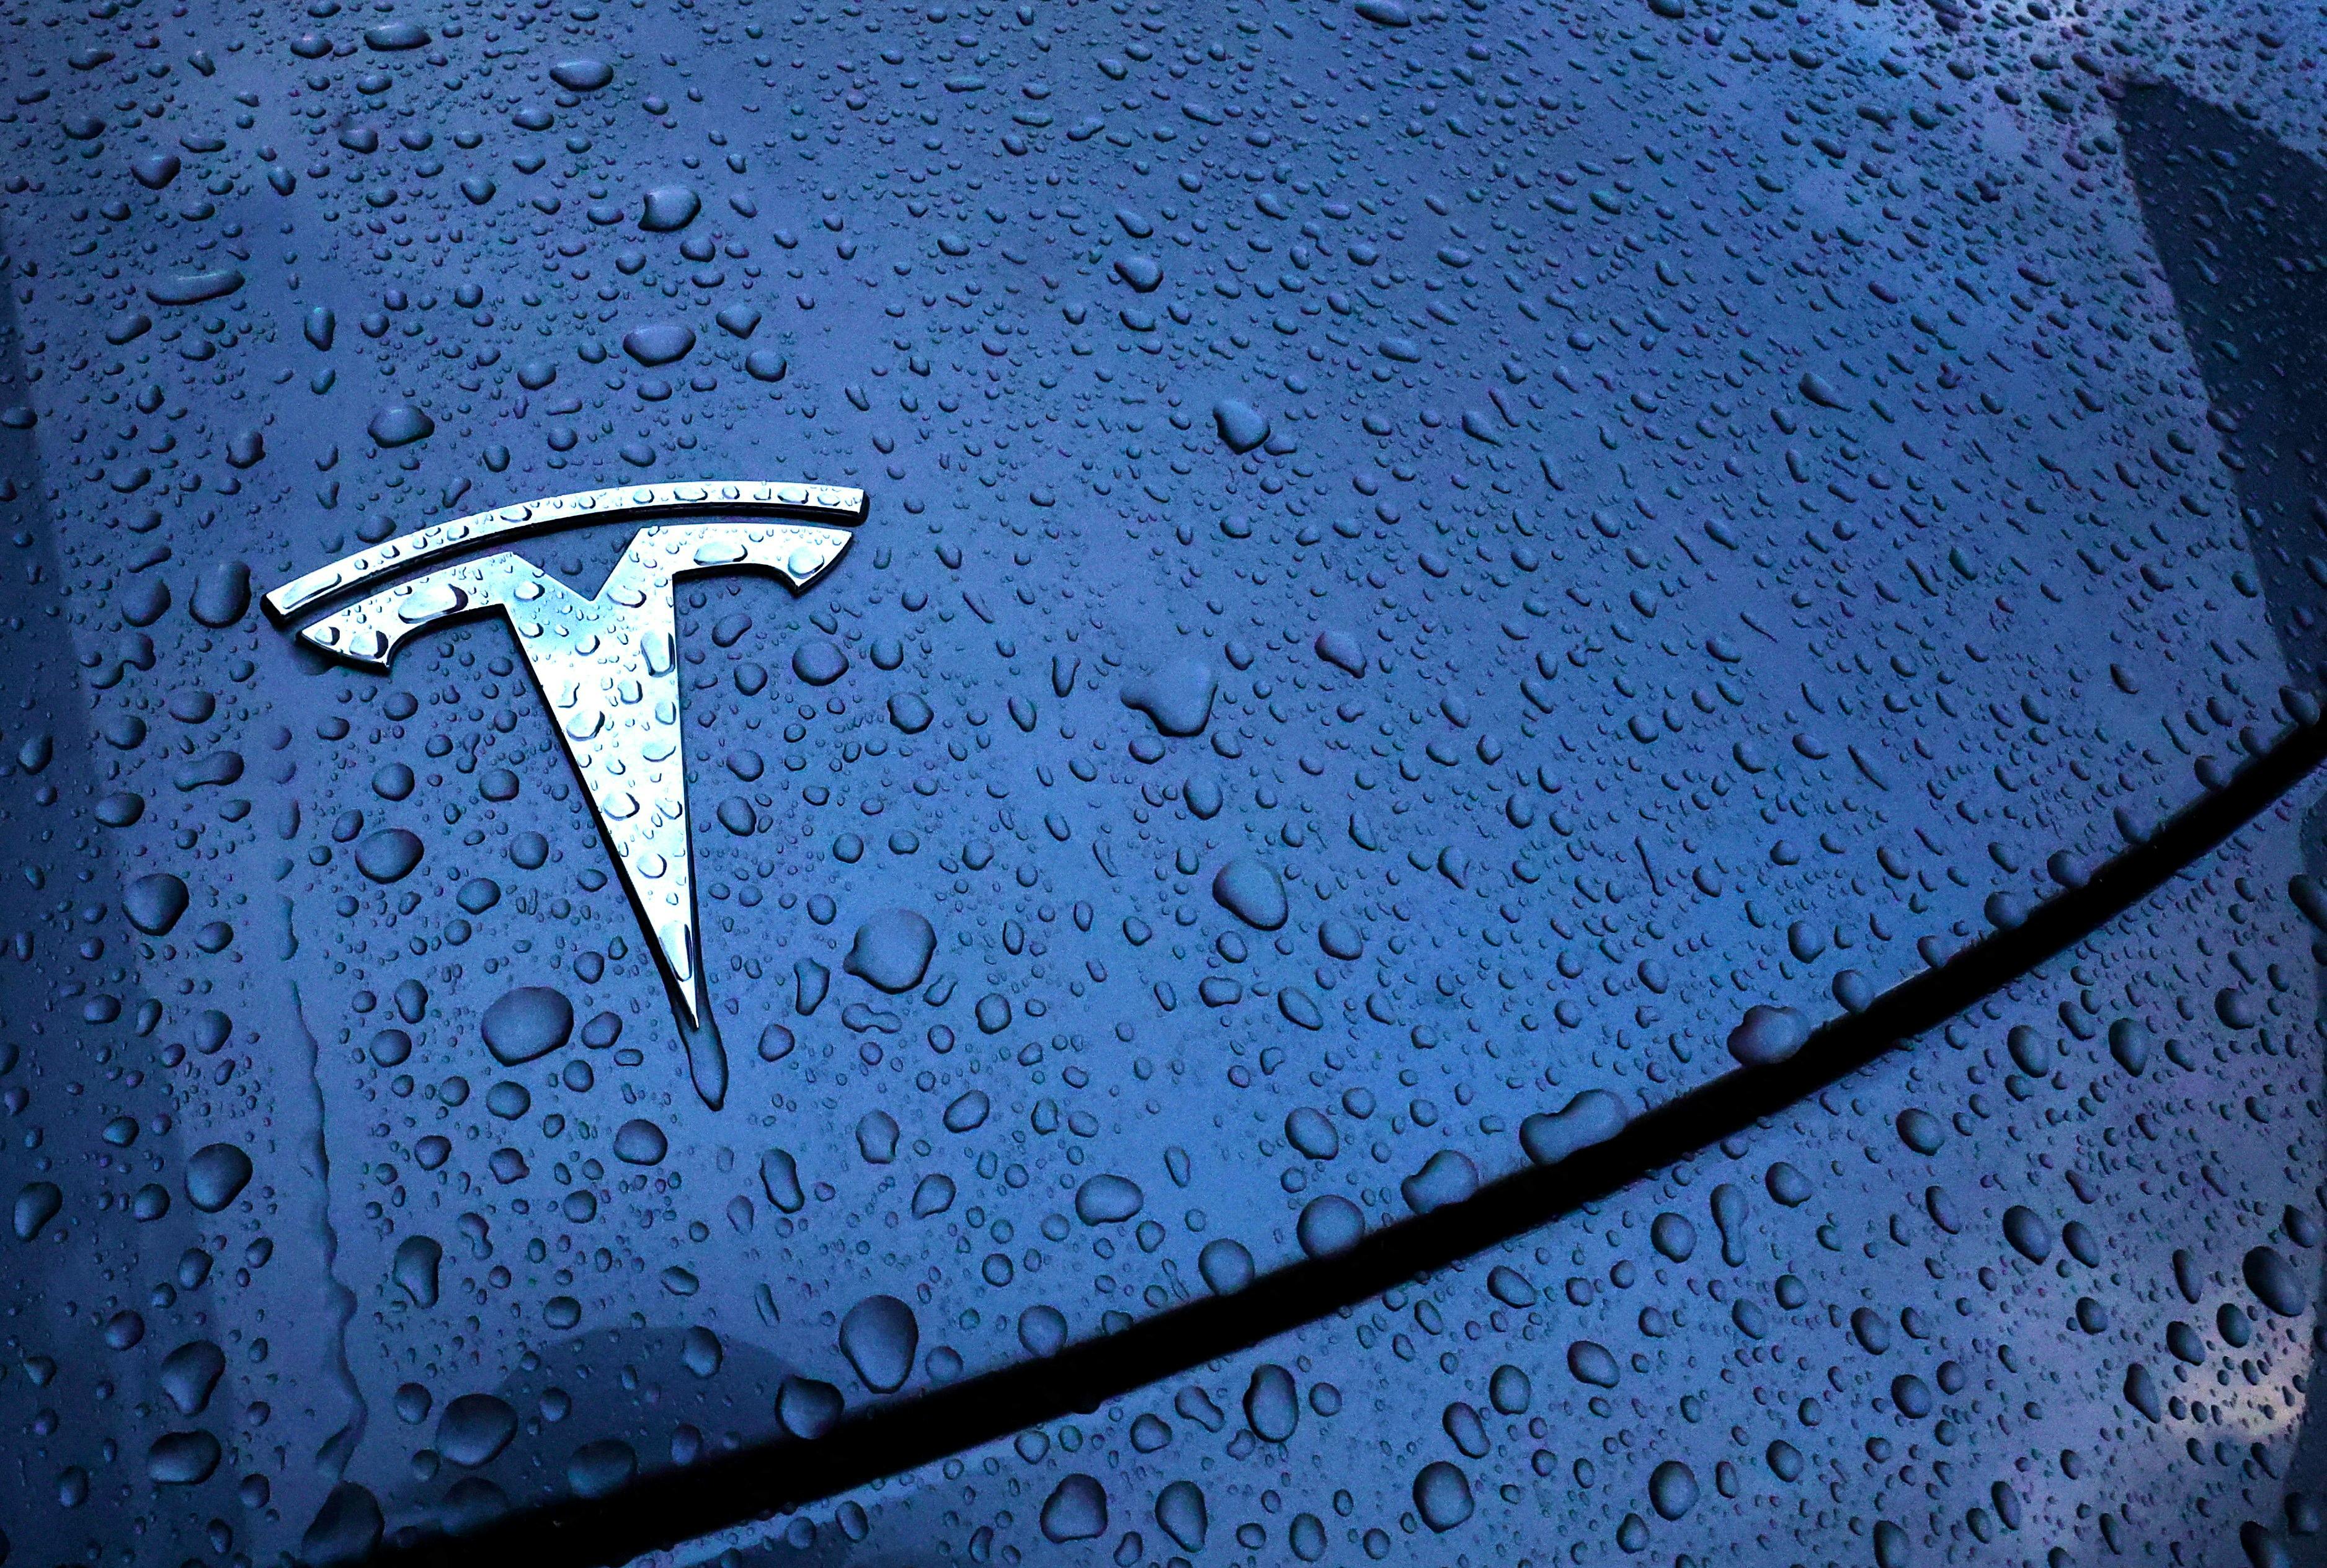 Tesla's Cybertruck feels like an SUV; price, lower driving range upset some